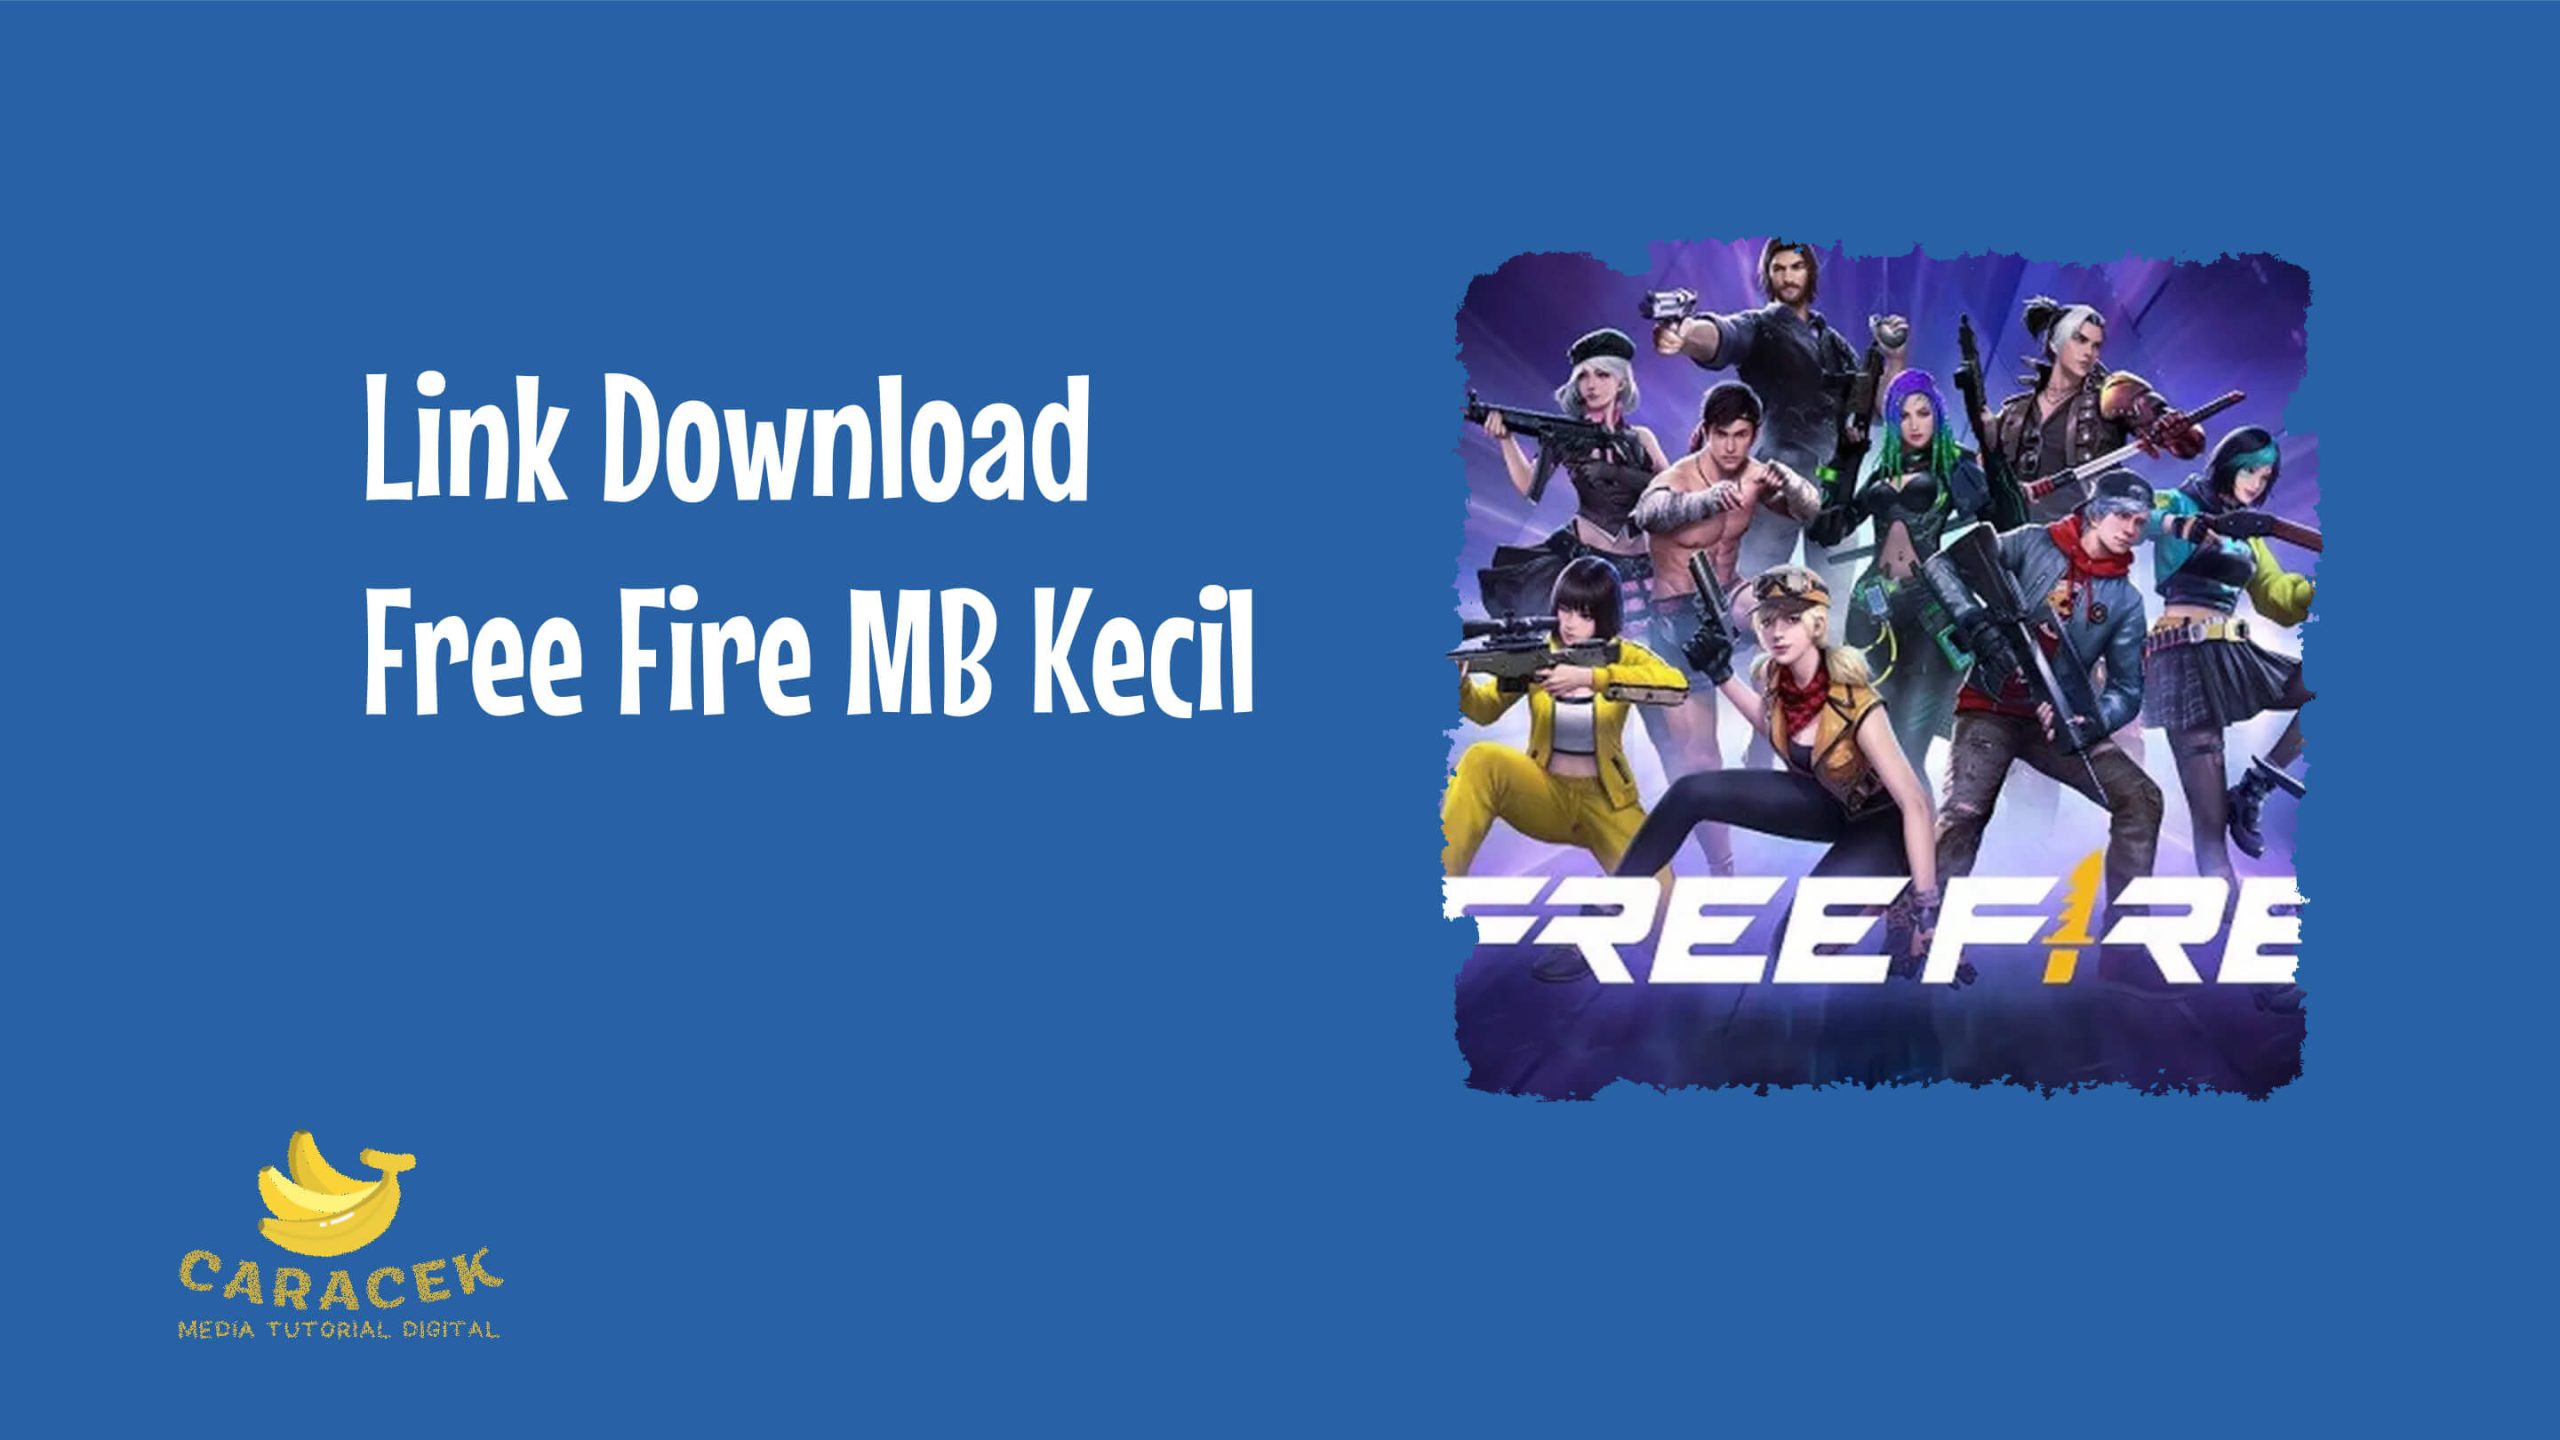 Download Free Fire MB Kecil